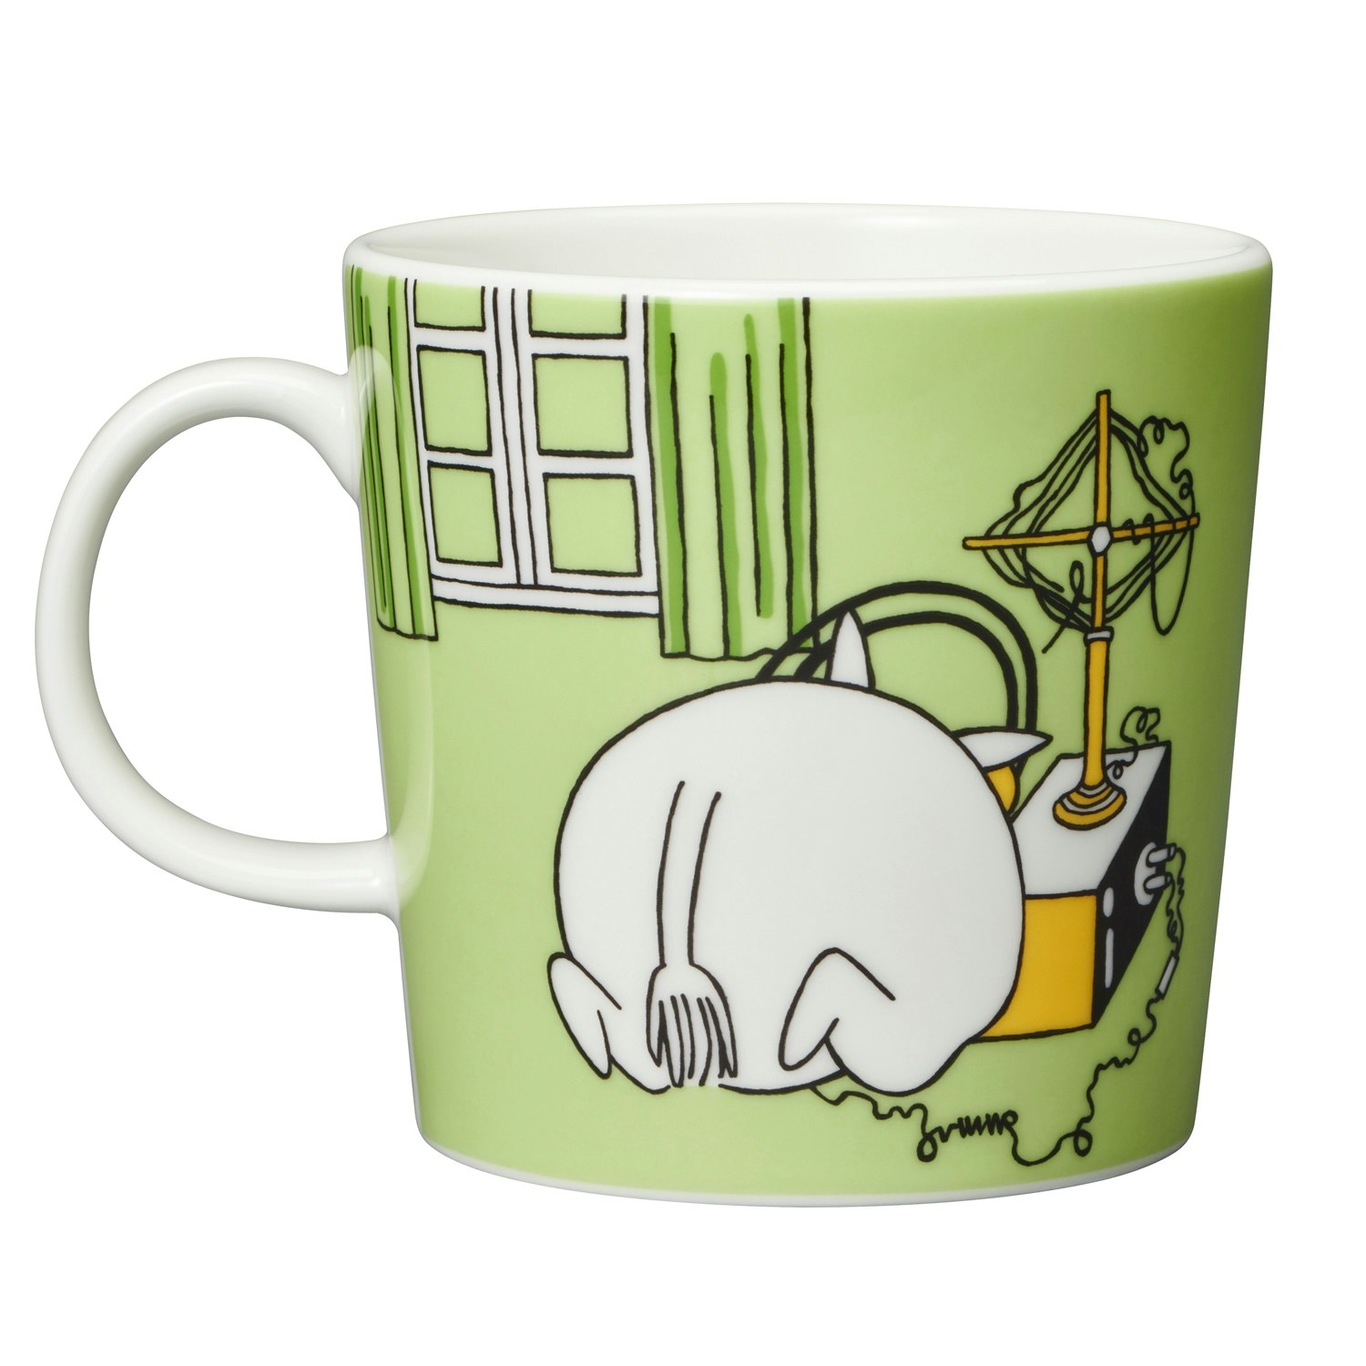 Moomin Mug, 30 cl, True to its origins - Arabia @ RoyalDesign